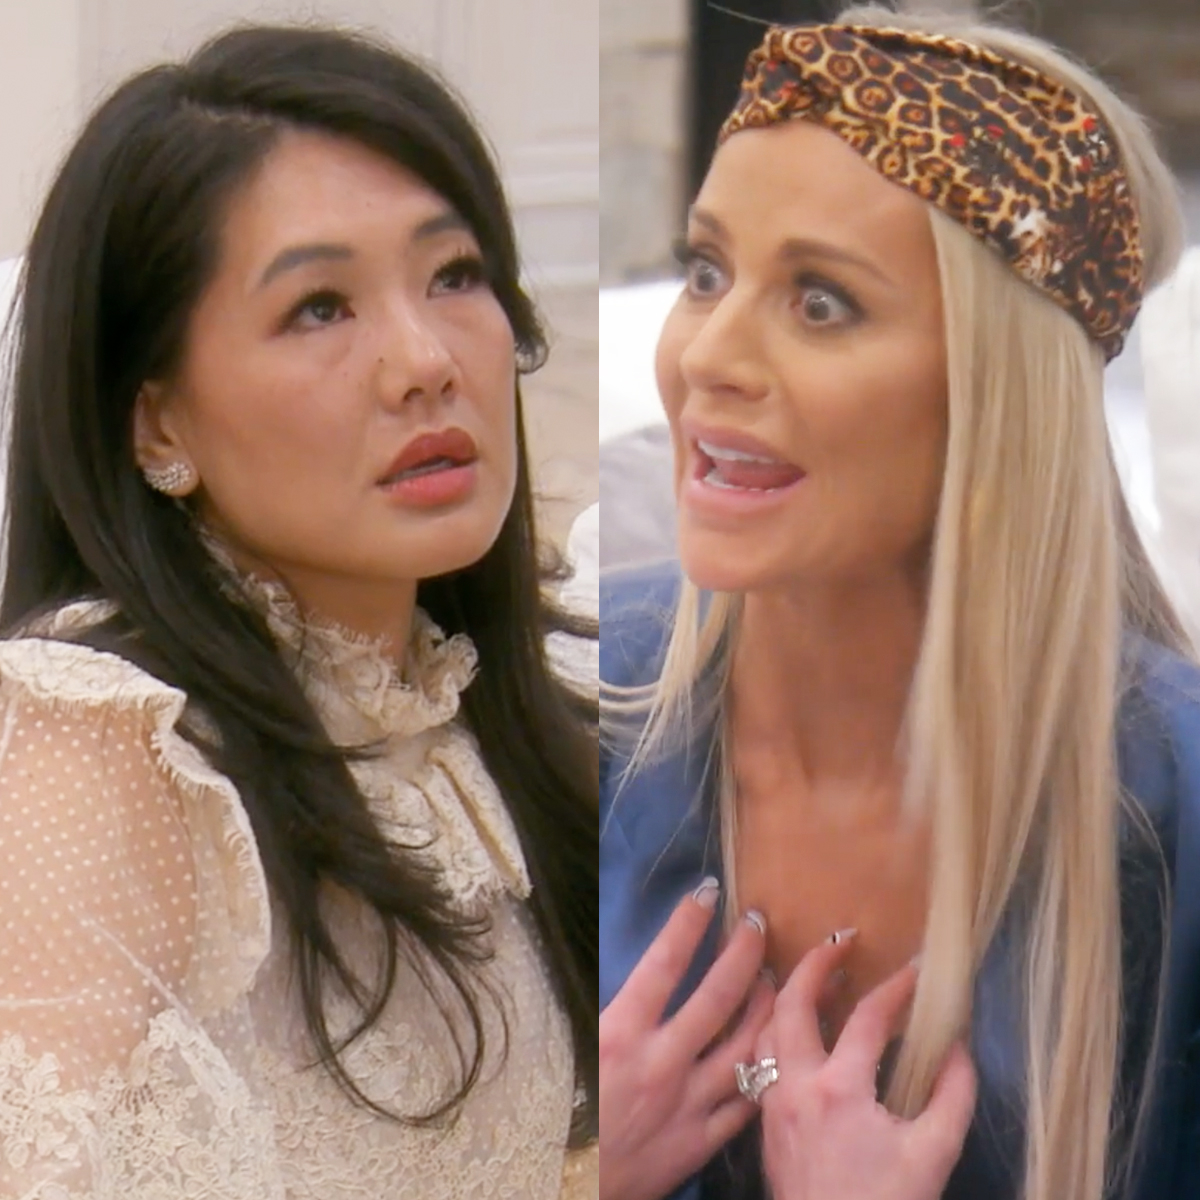 Real Housewives of Beverly Hills: Season 11 Episode 19 Dorit's Gold LV Hoop  Earrings